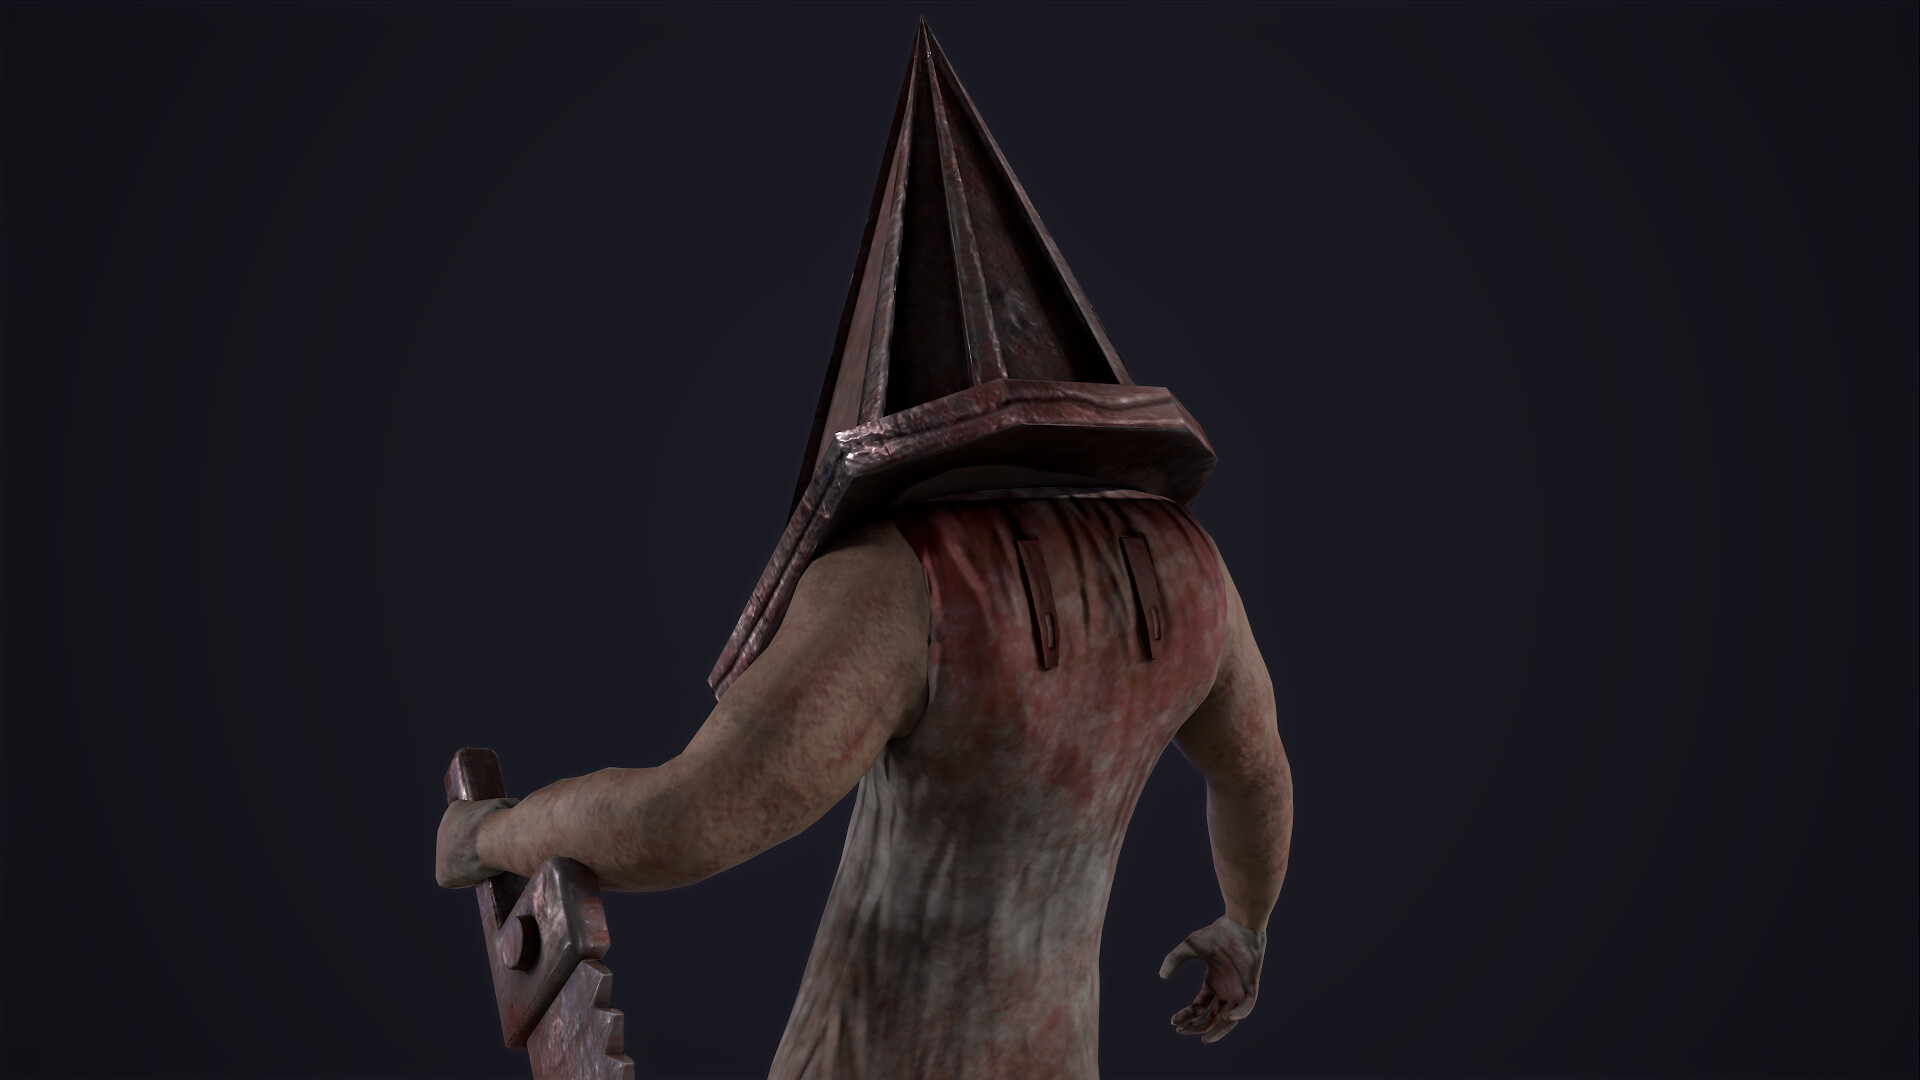 ArtStation - The Executioner (Pyramid Head) Dead By Daylight